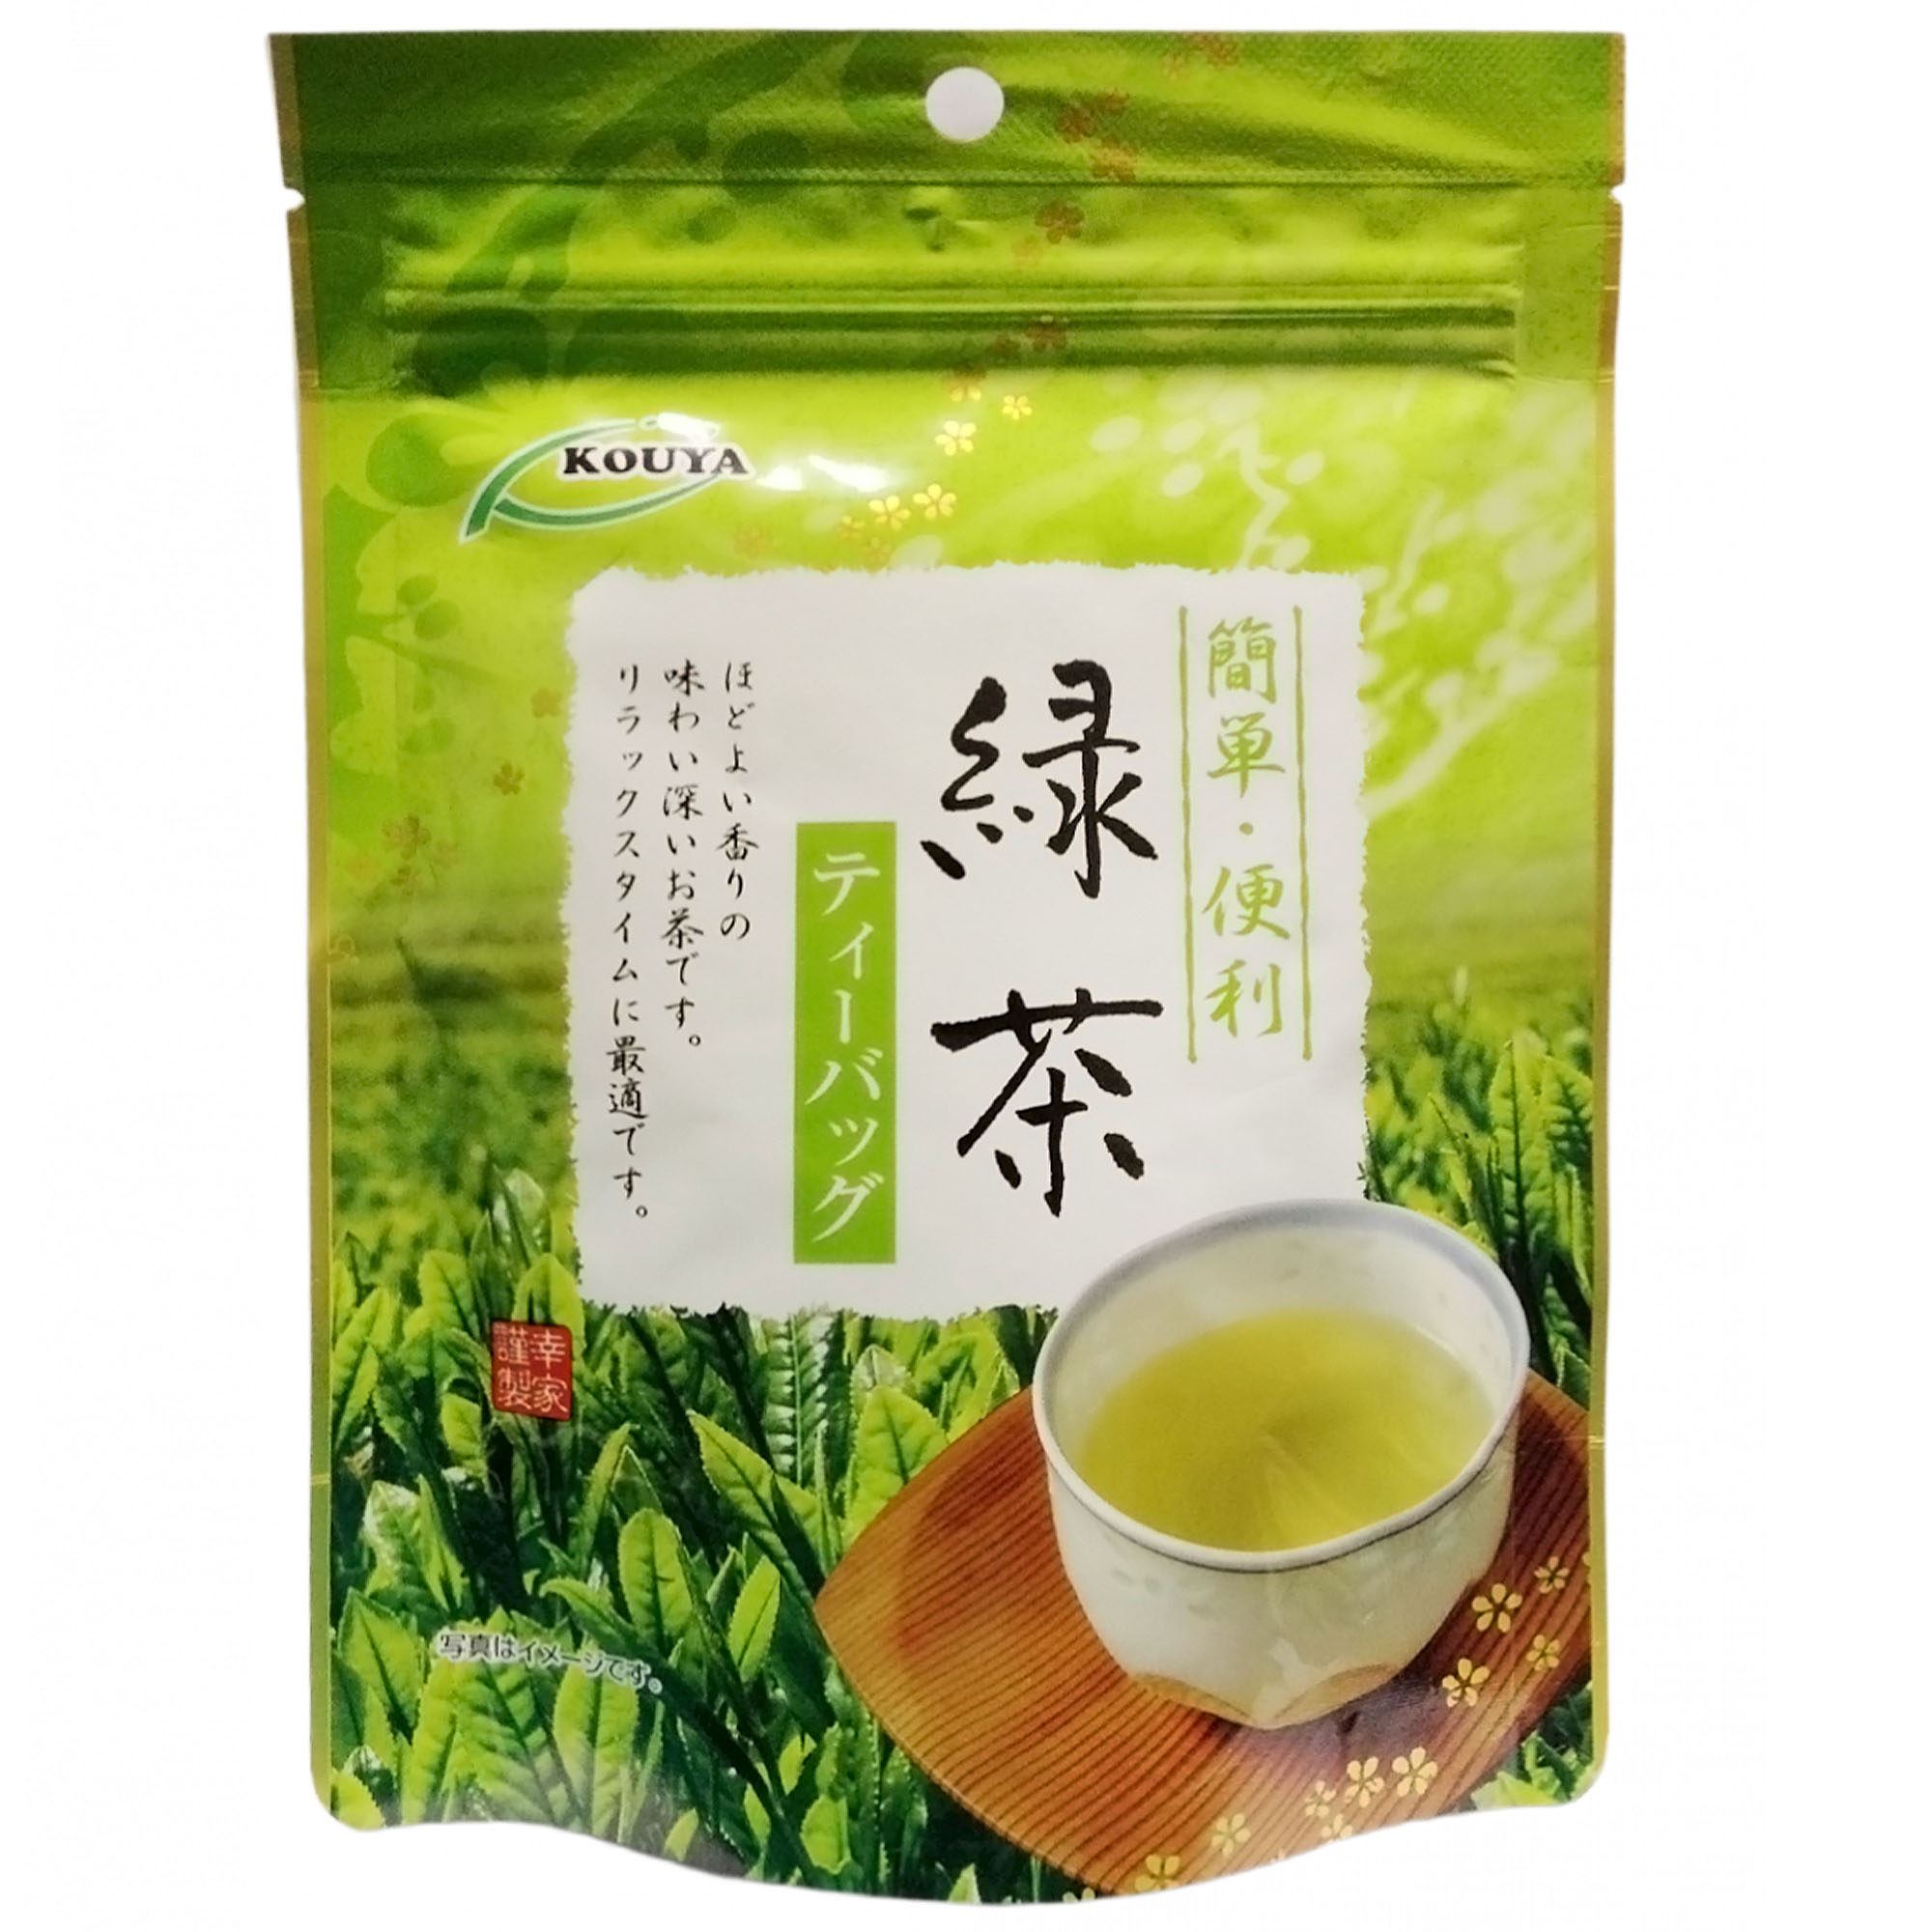 Японский зеленый чай Kouya РЁКУ-ча (15 шт), 30 г чай зеленый листовой ча бао зеленый шелк китай 100 г